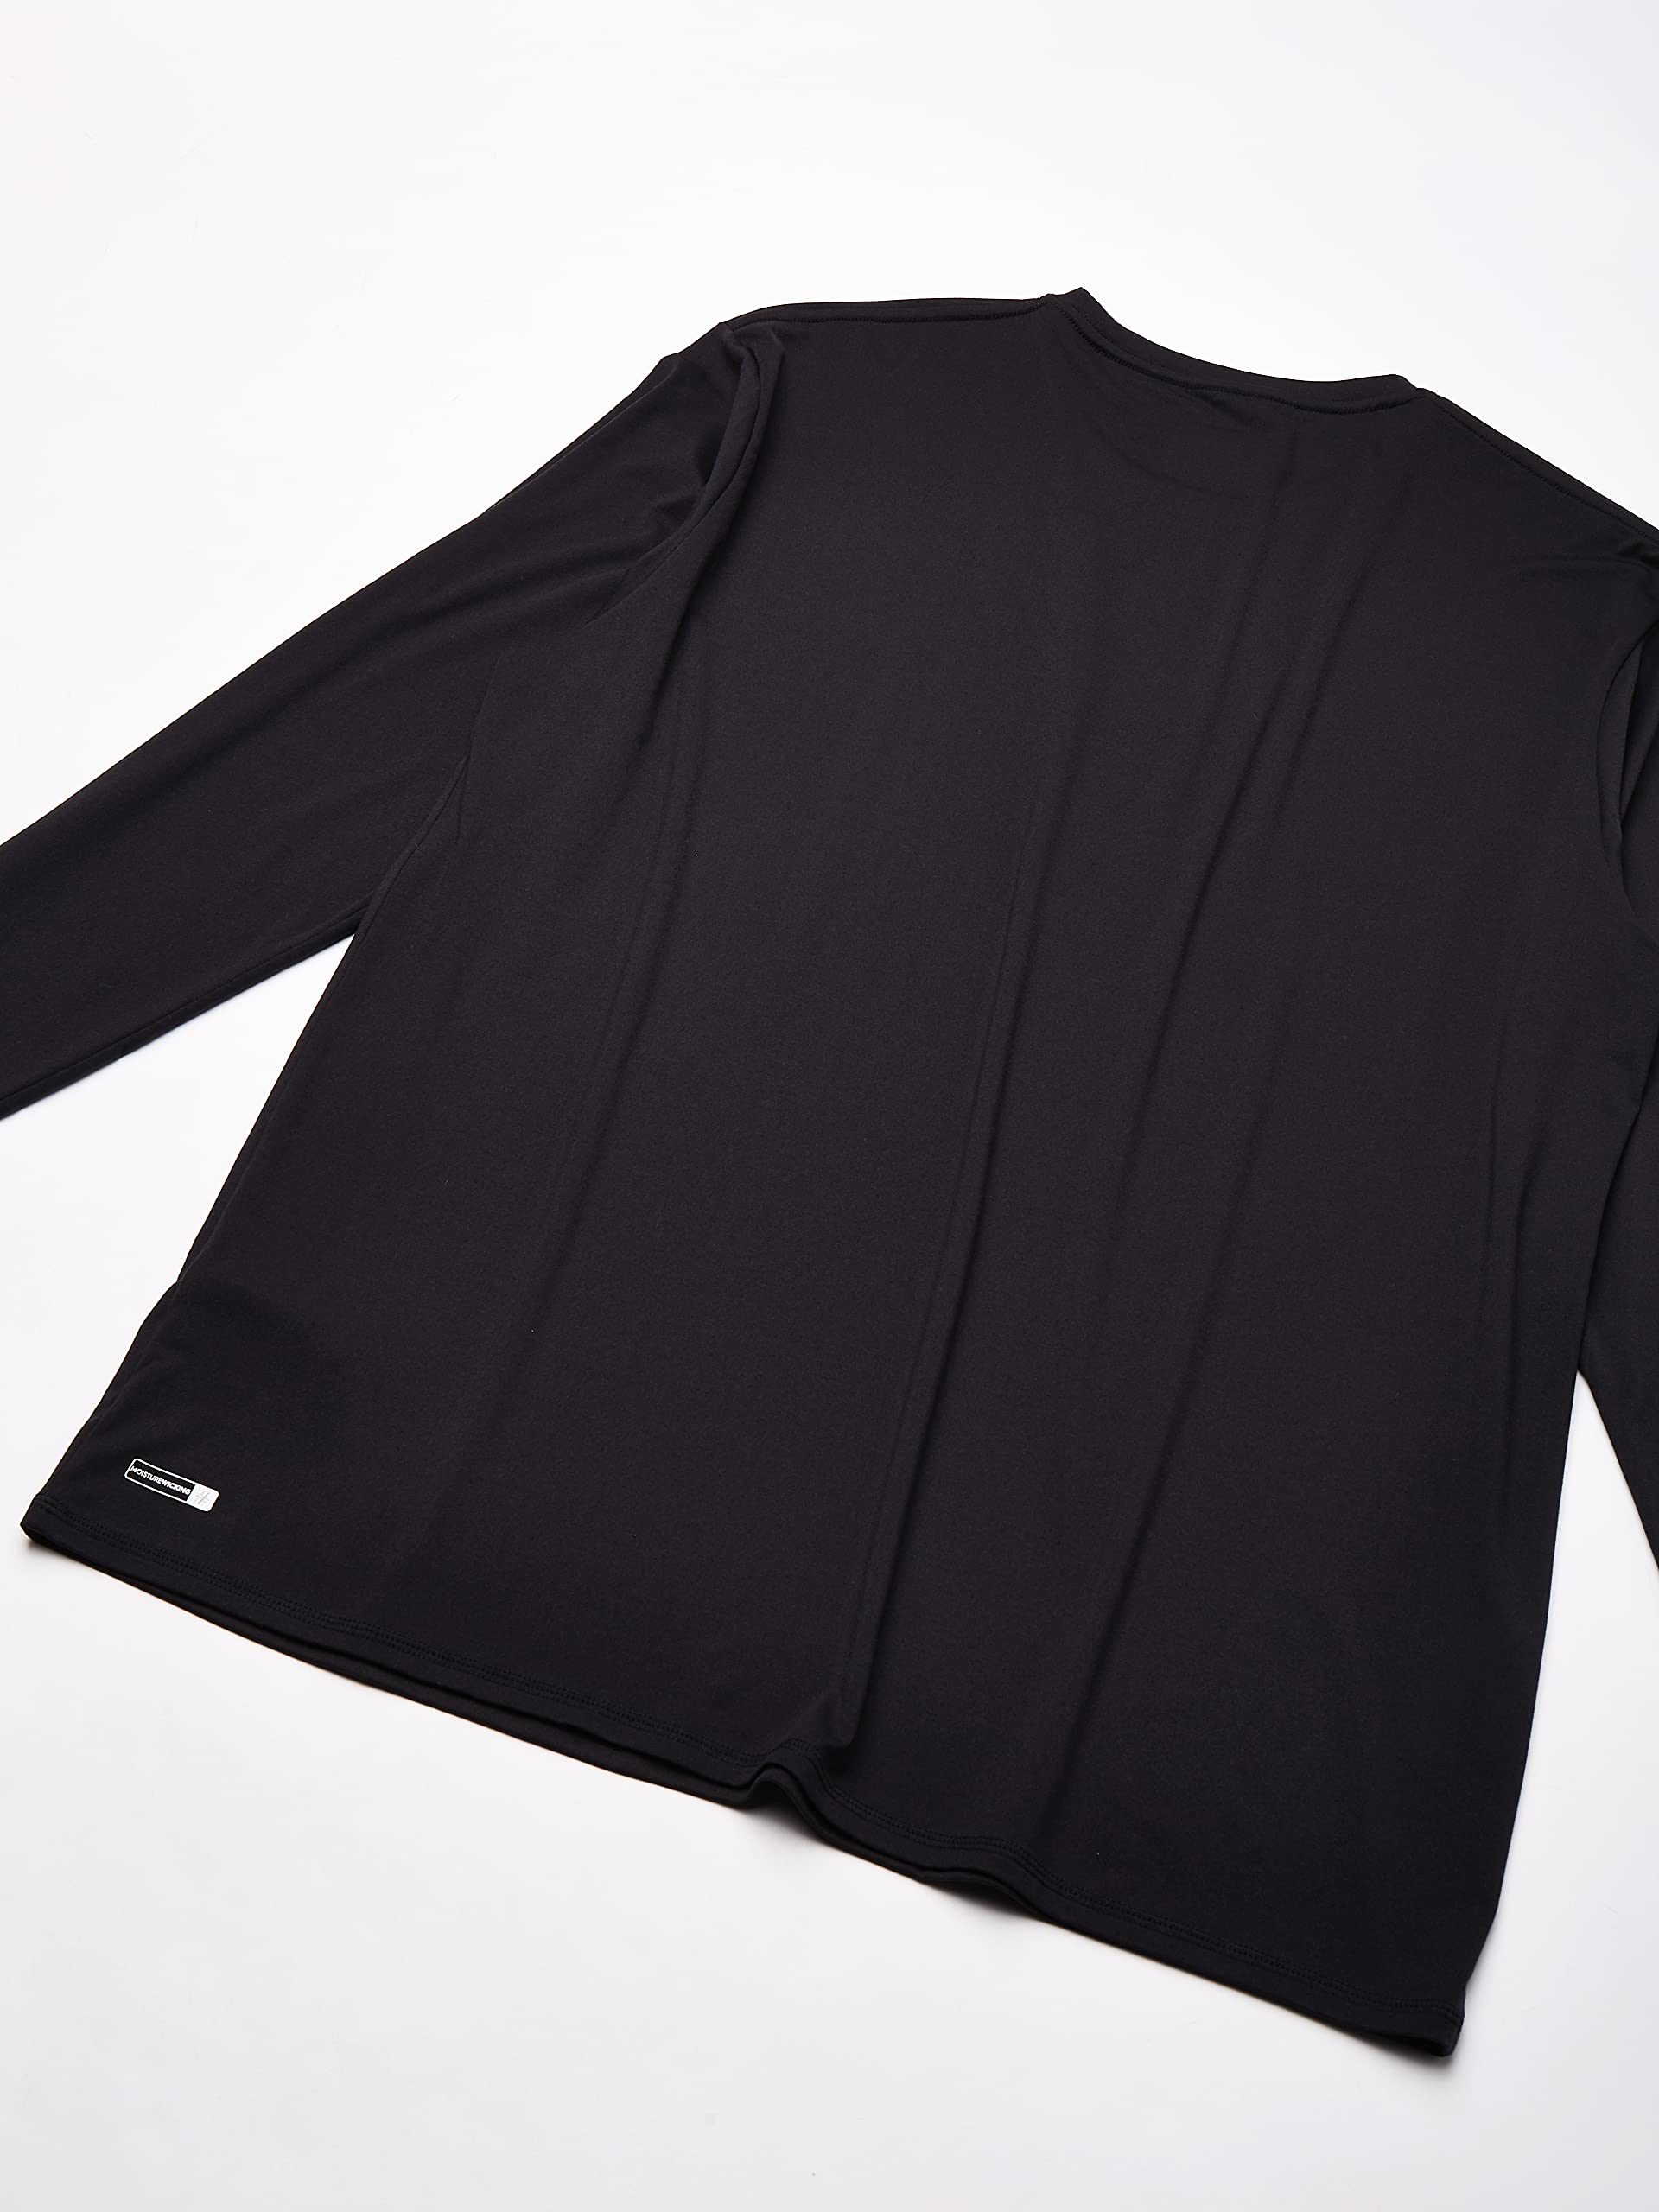 Quiksilver Men's Standard Solid Streak Long Sleeve Rashguard UPF 50 Sun Protection Surf Shirt